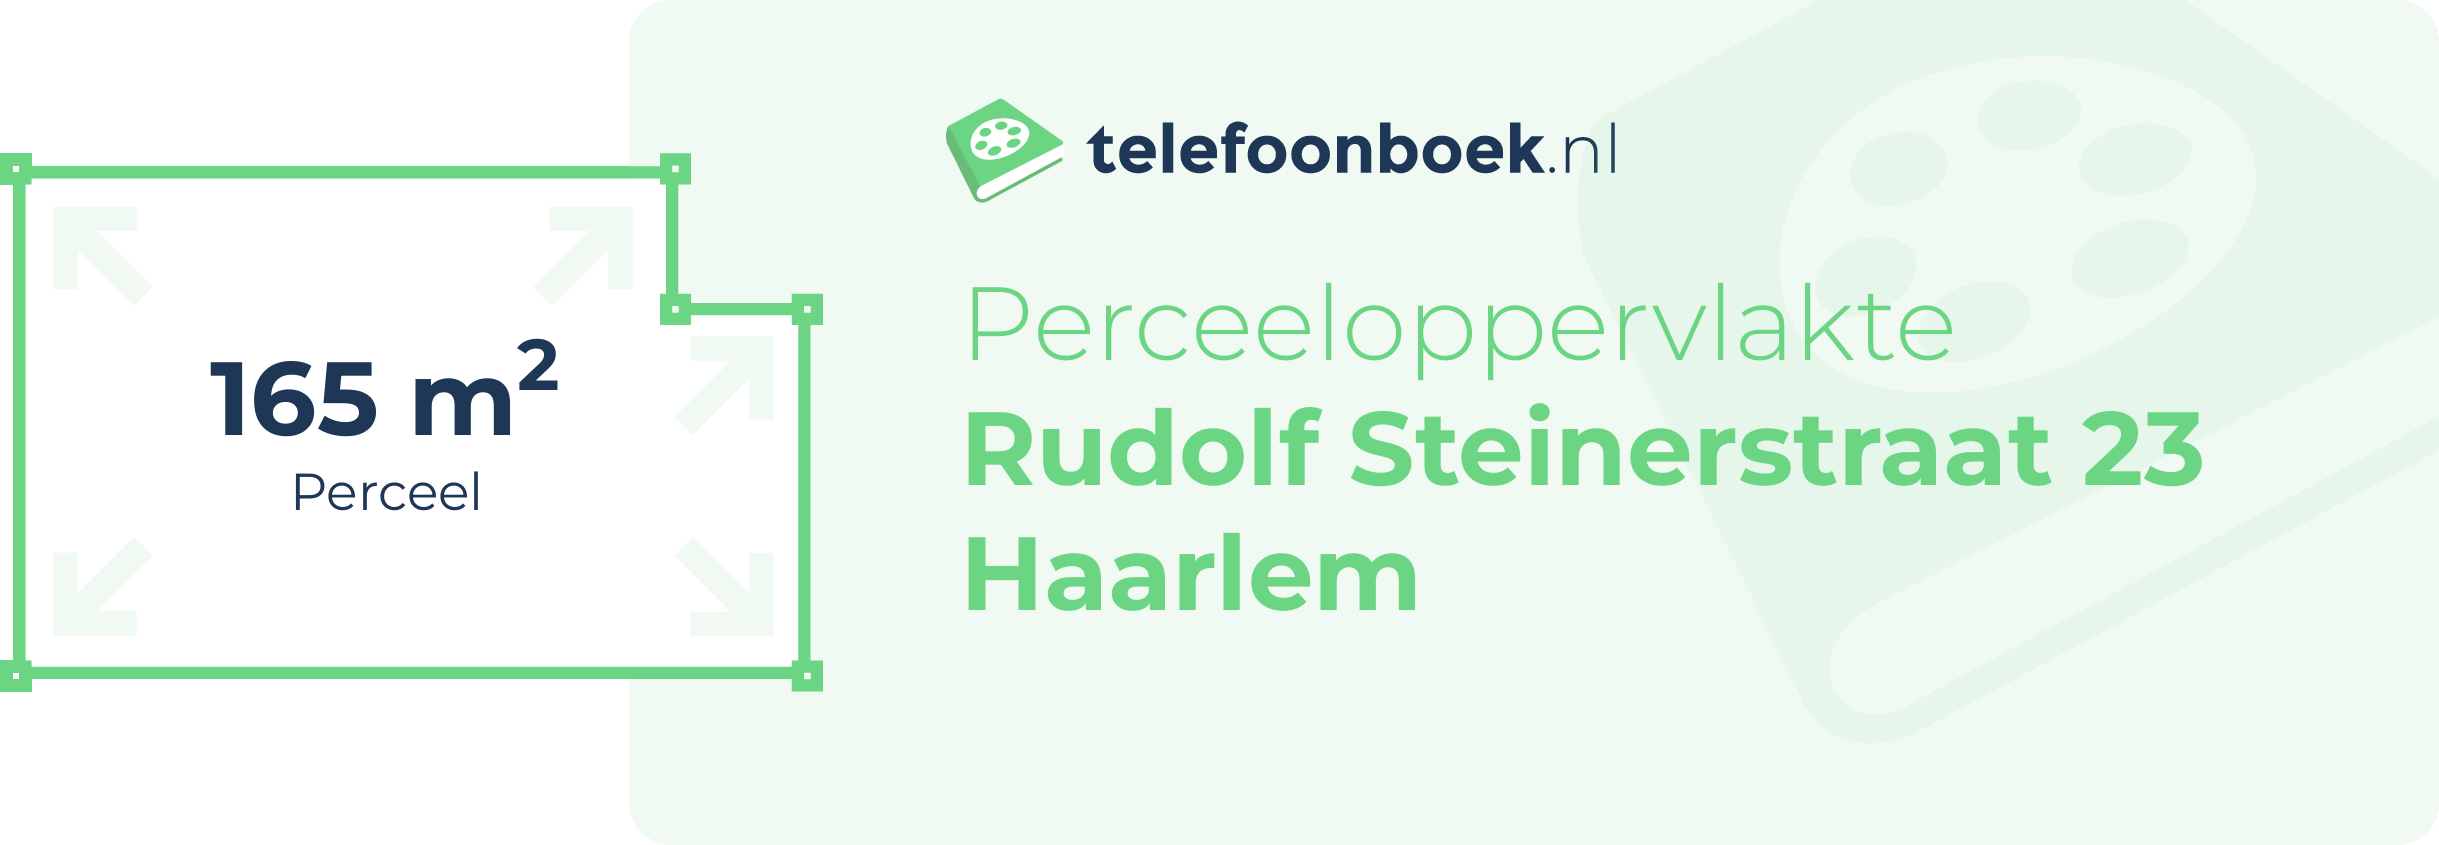 Perceeloppervlakte Rudolf Steinerstraat 23 Haarlem